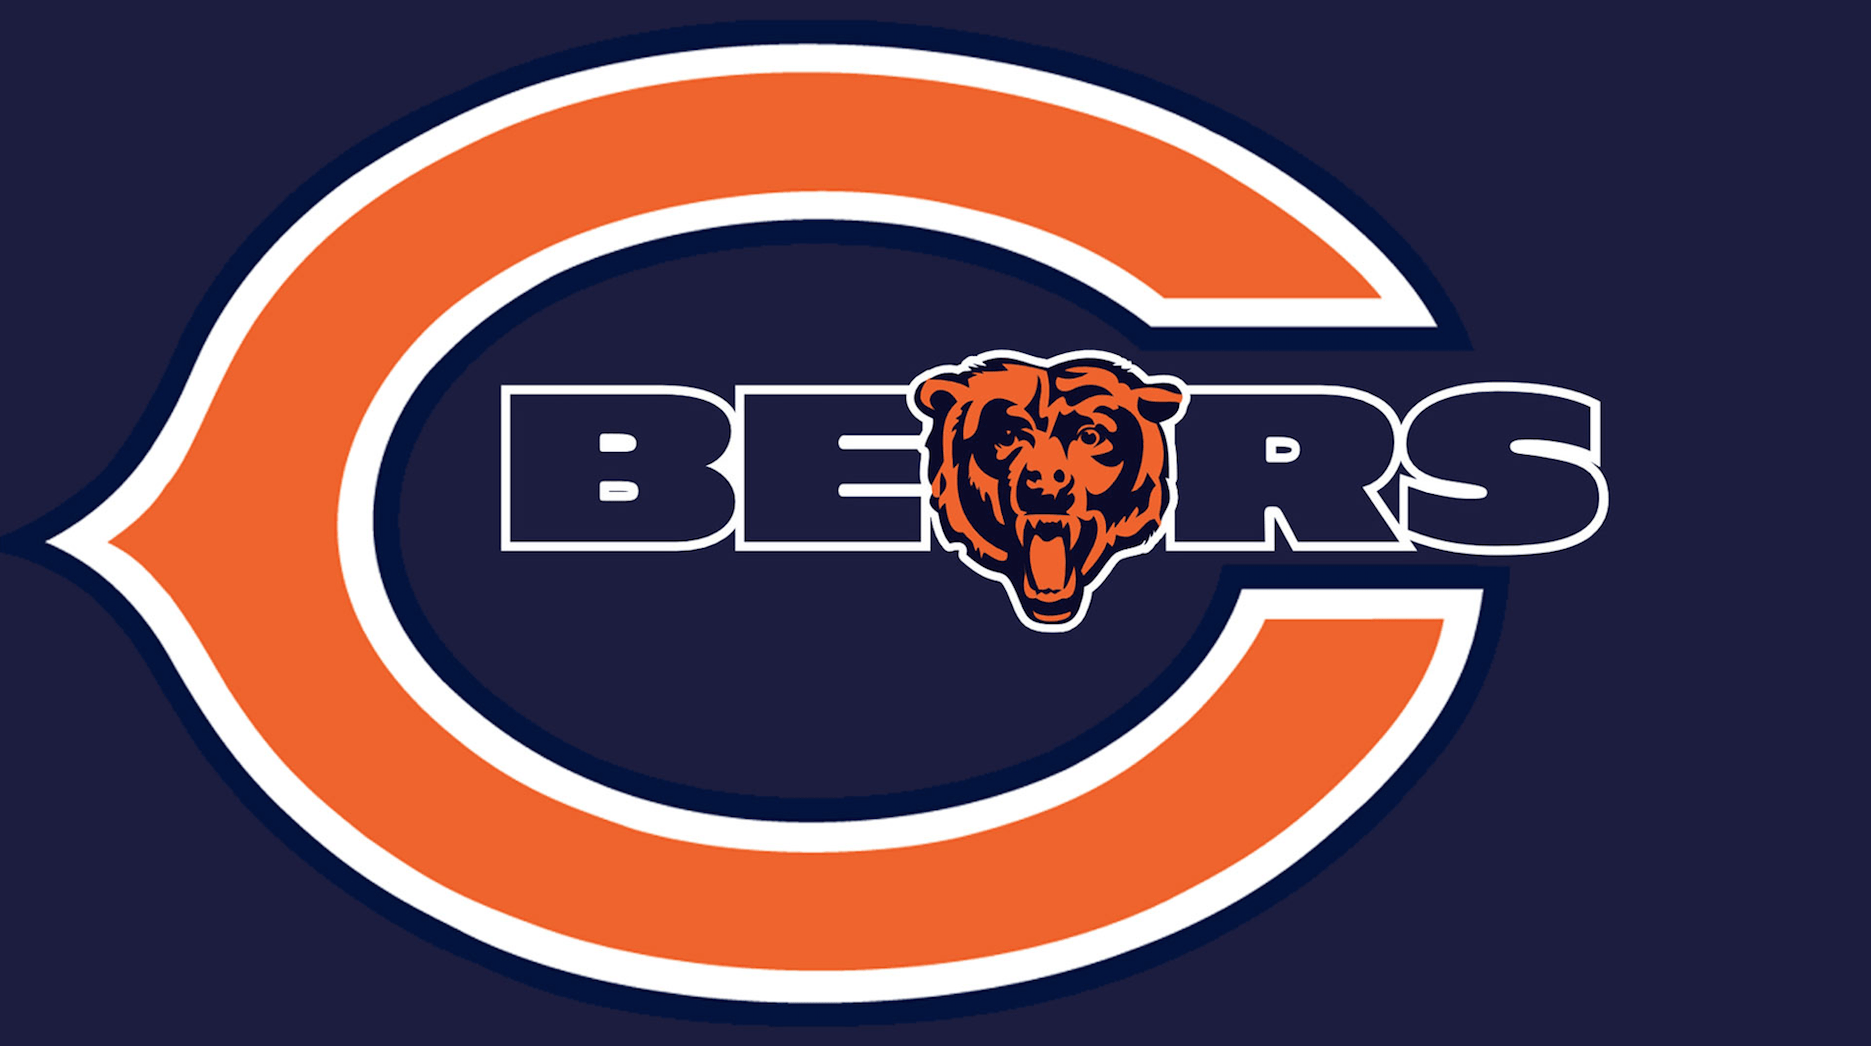 Chicago Bears Logo - chicago-bears-logo.png - ABC Columbia